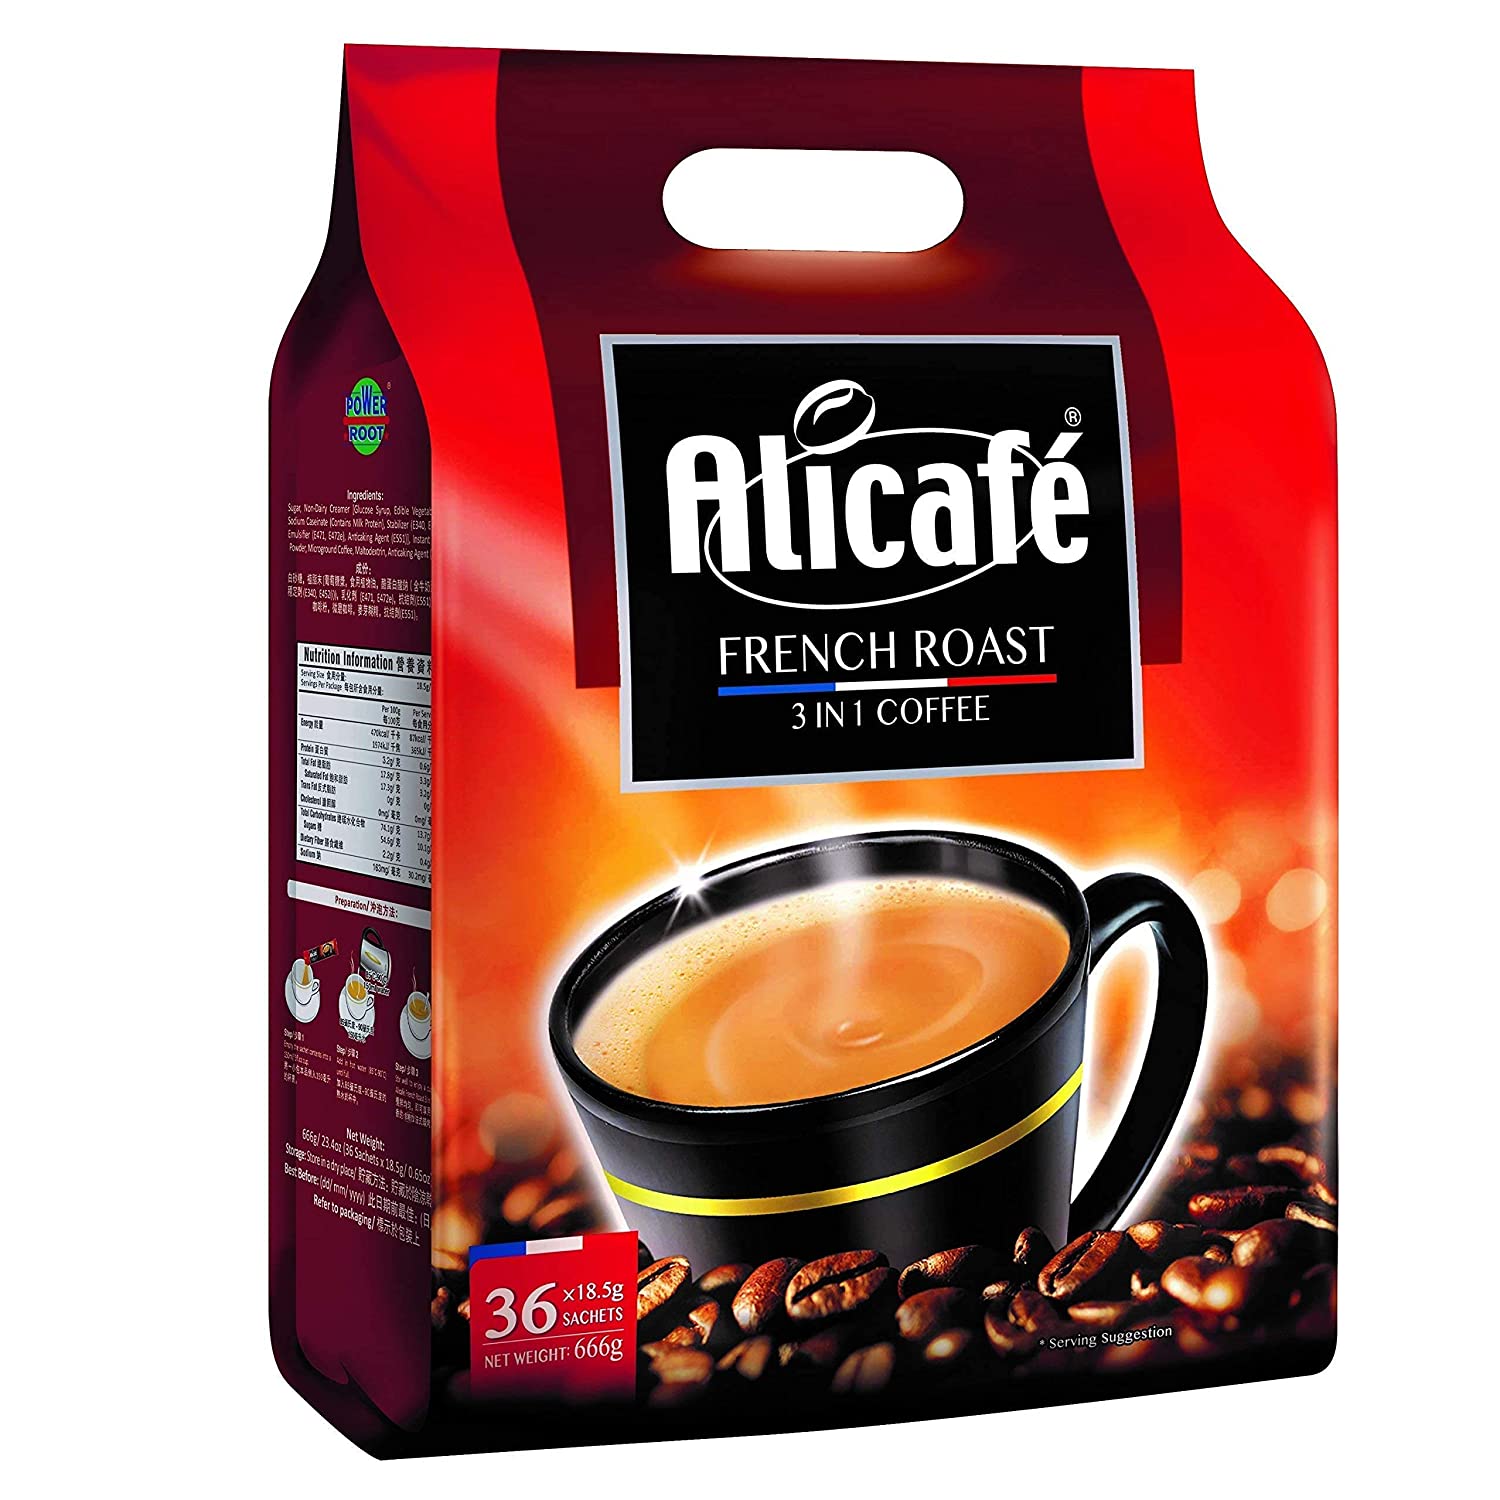 Alicafe French Roast Coffee Image